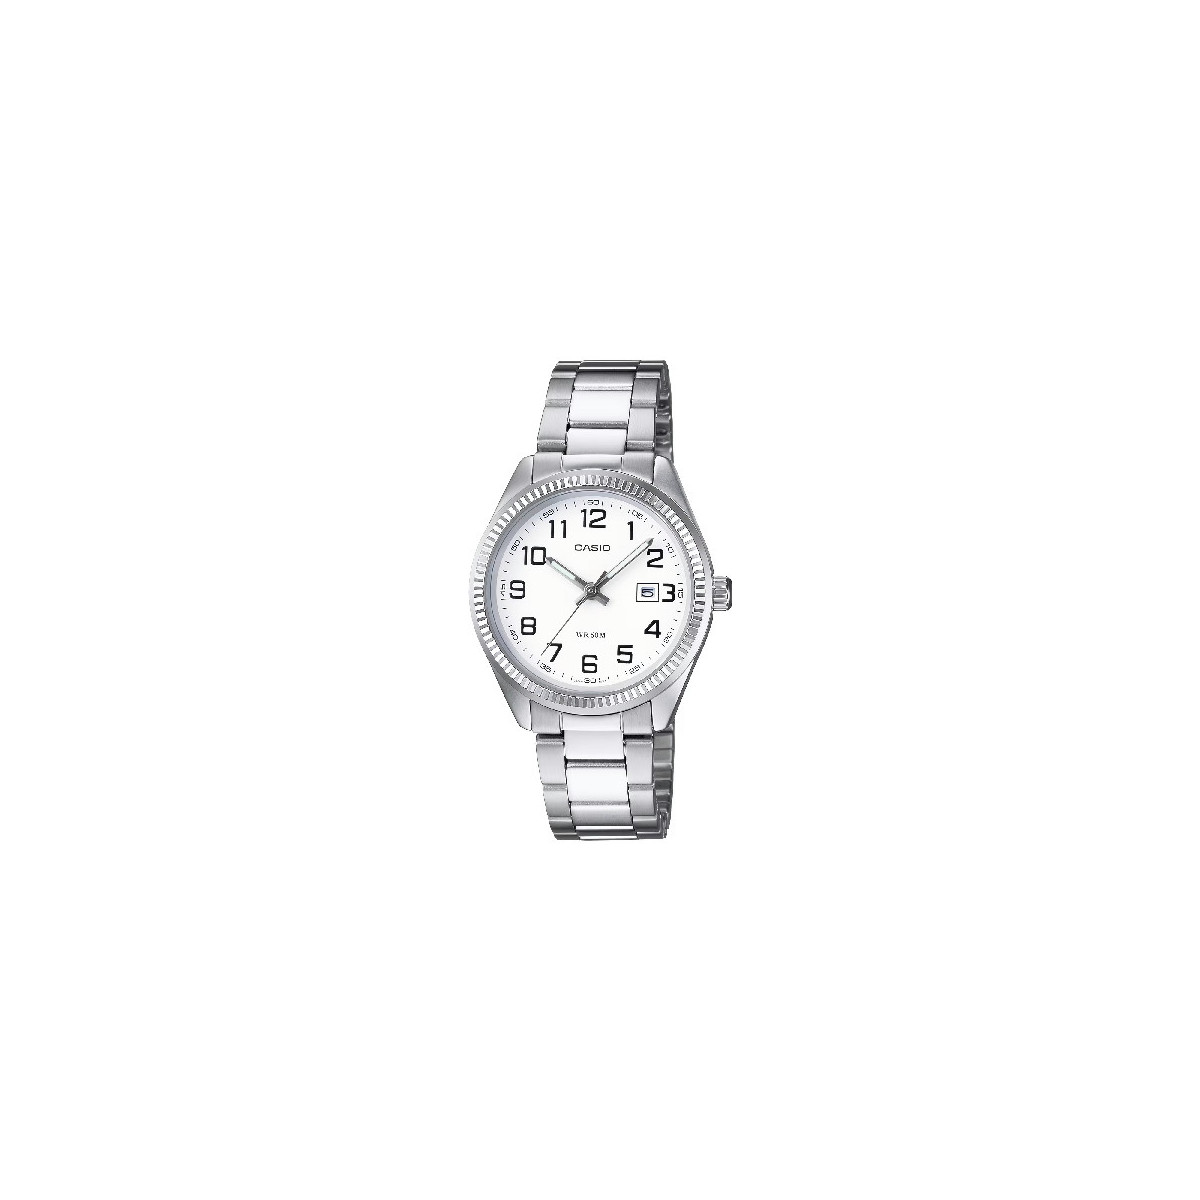 Reloj Casio Collection para mujer 30